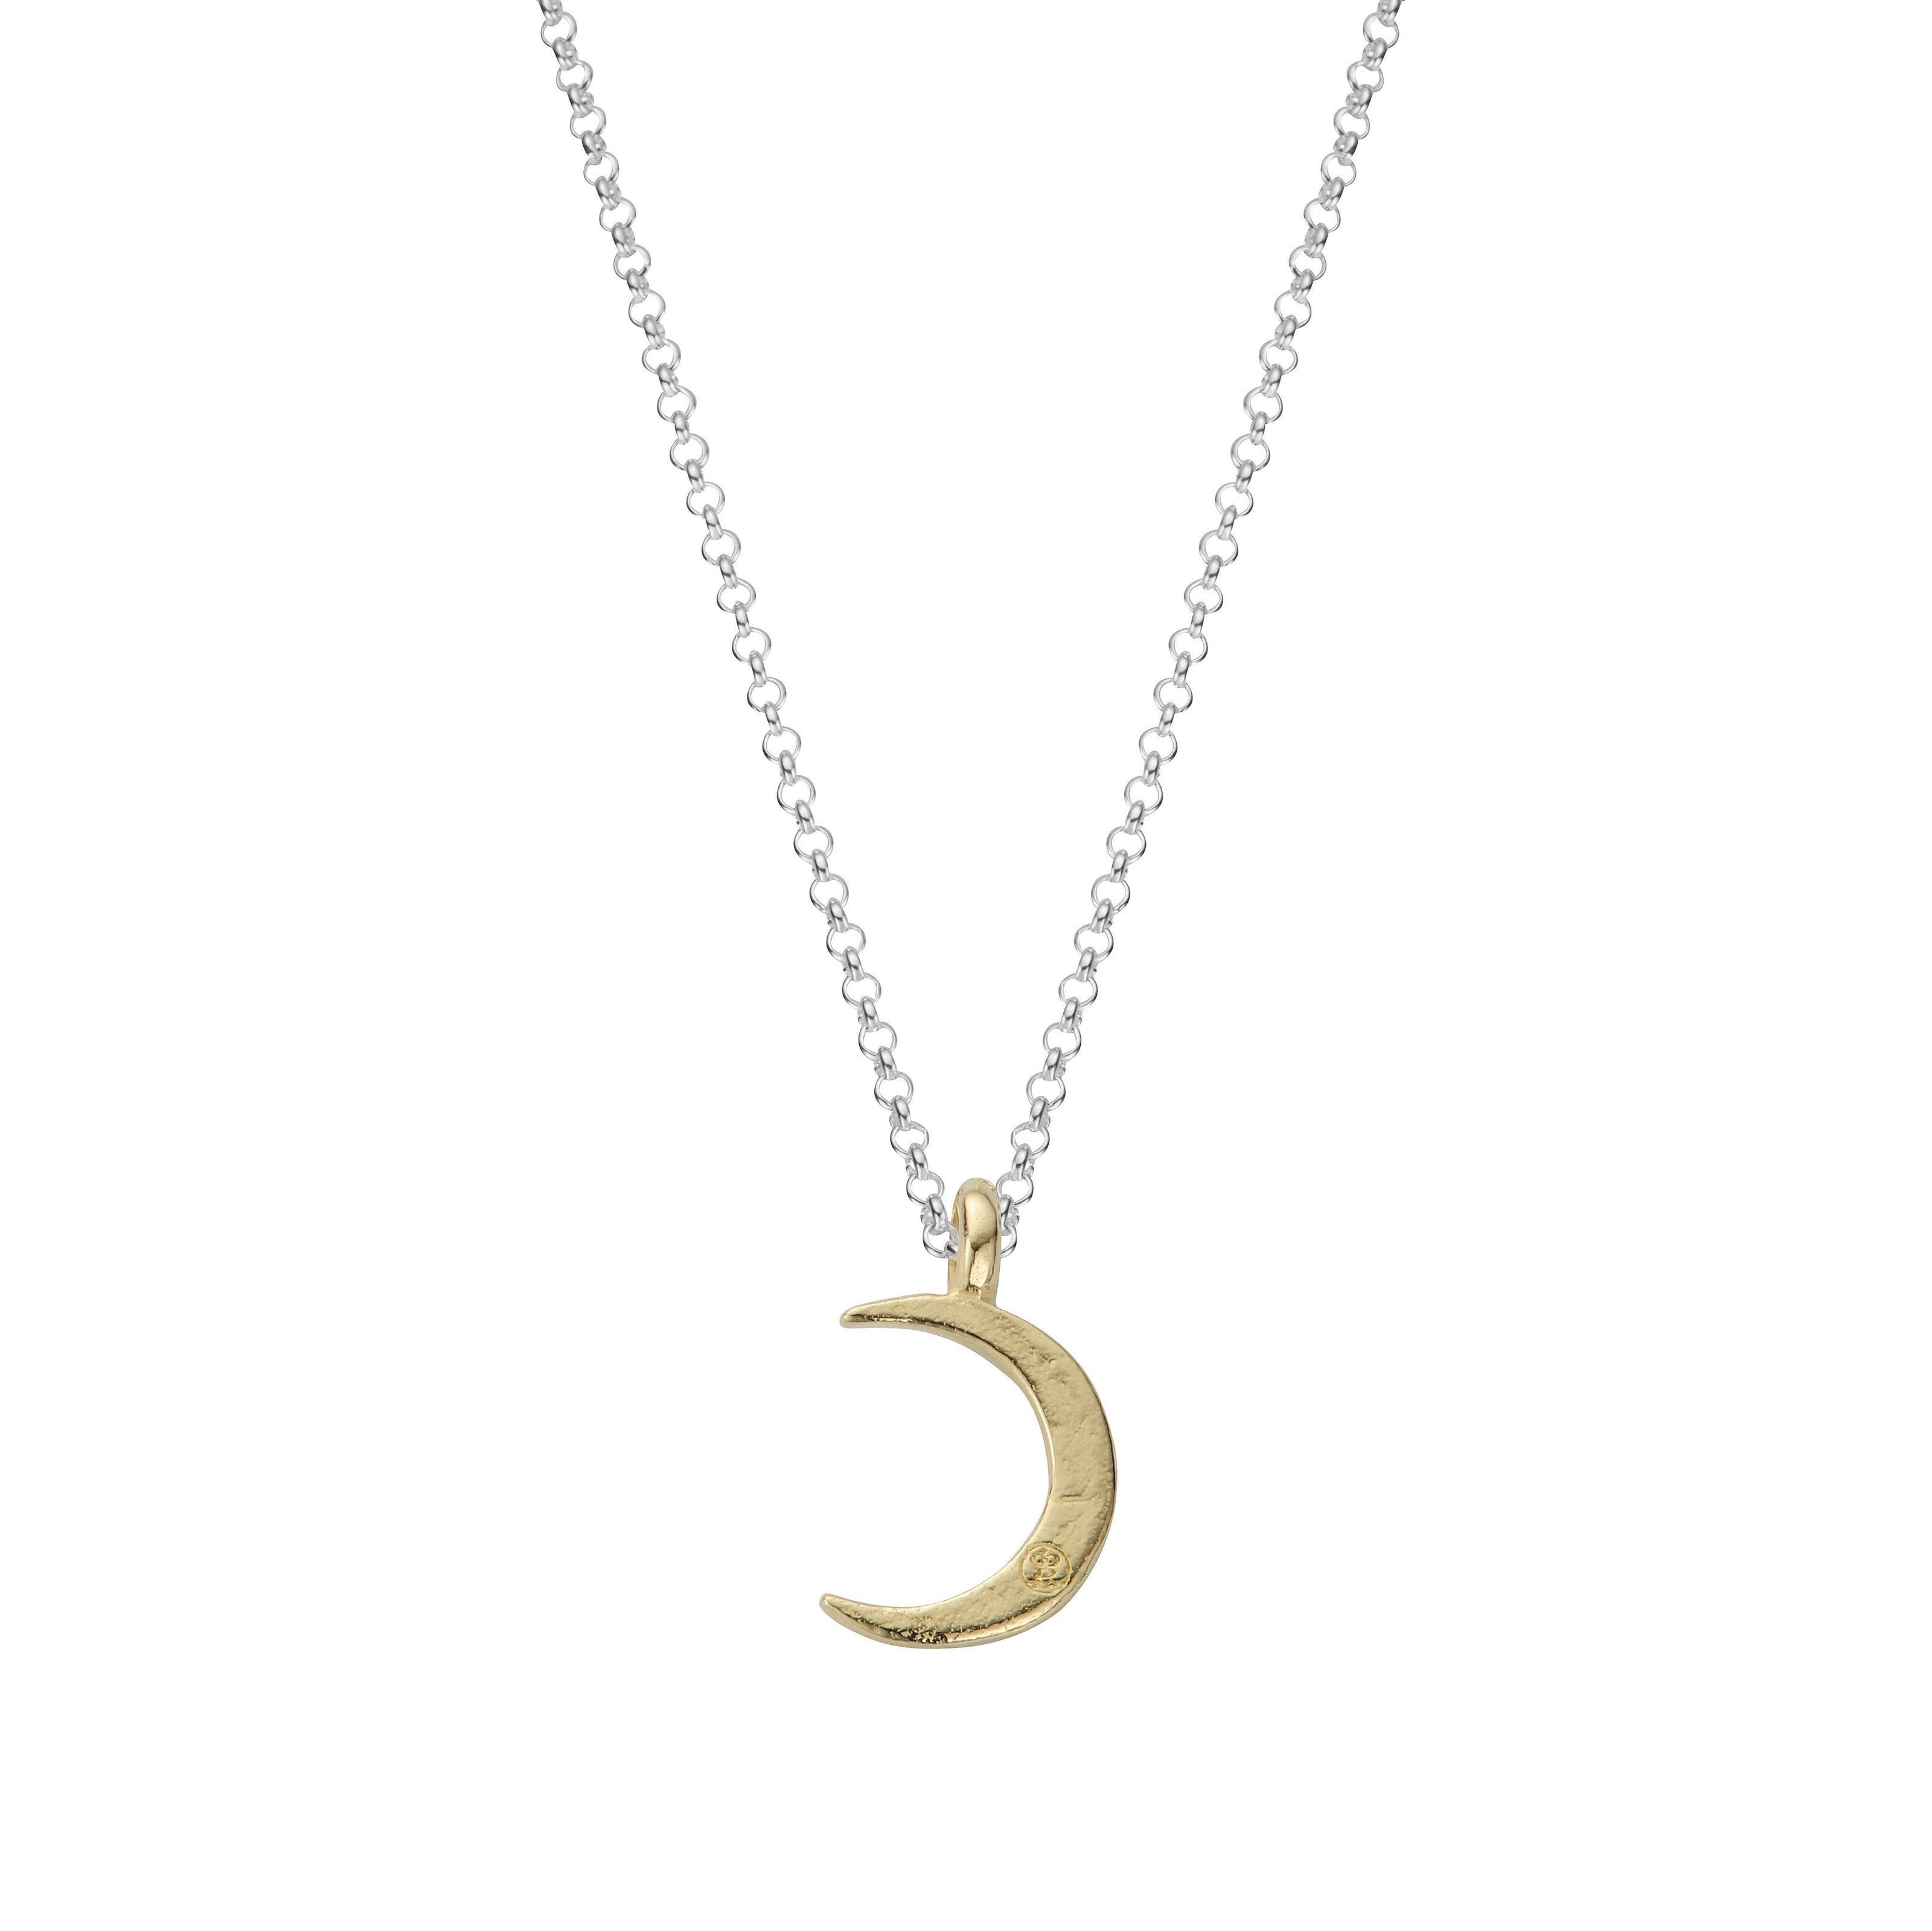 Silver & Gold Medium Crescent Moon Necklace